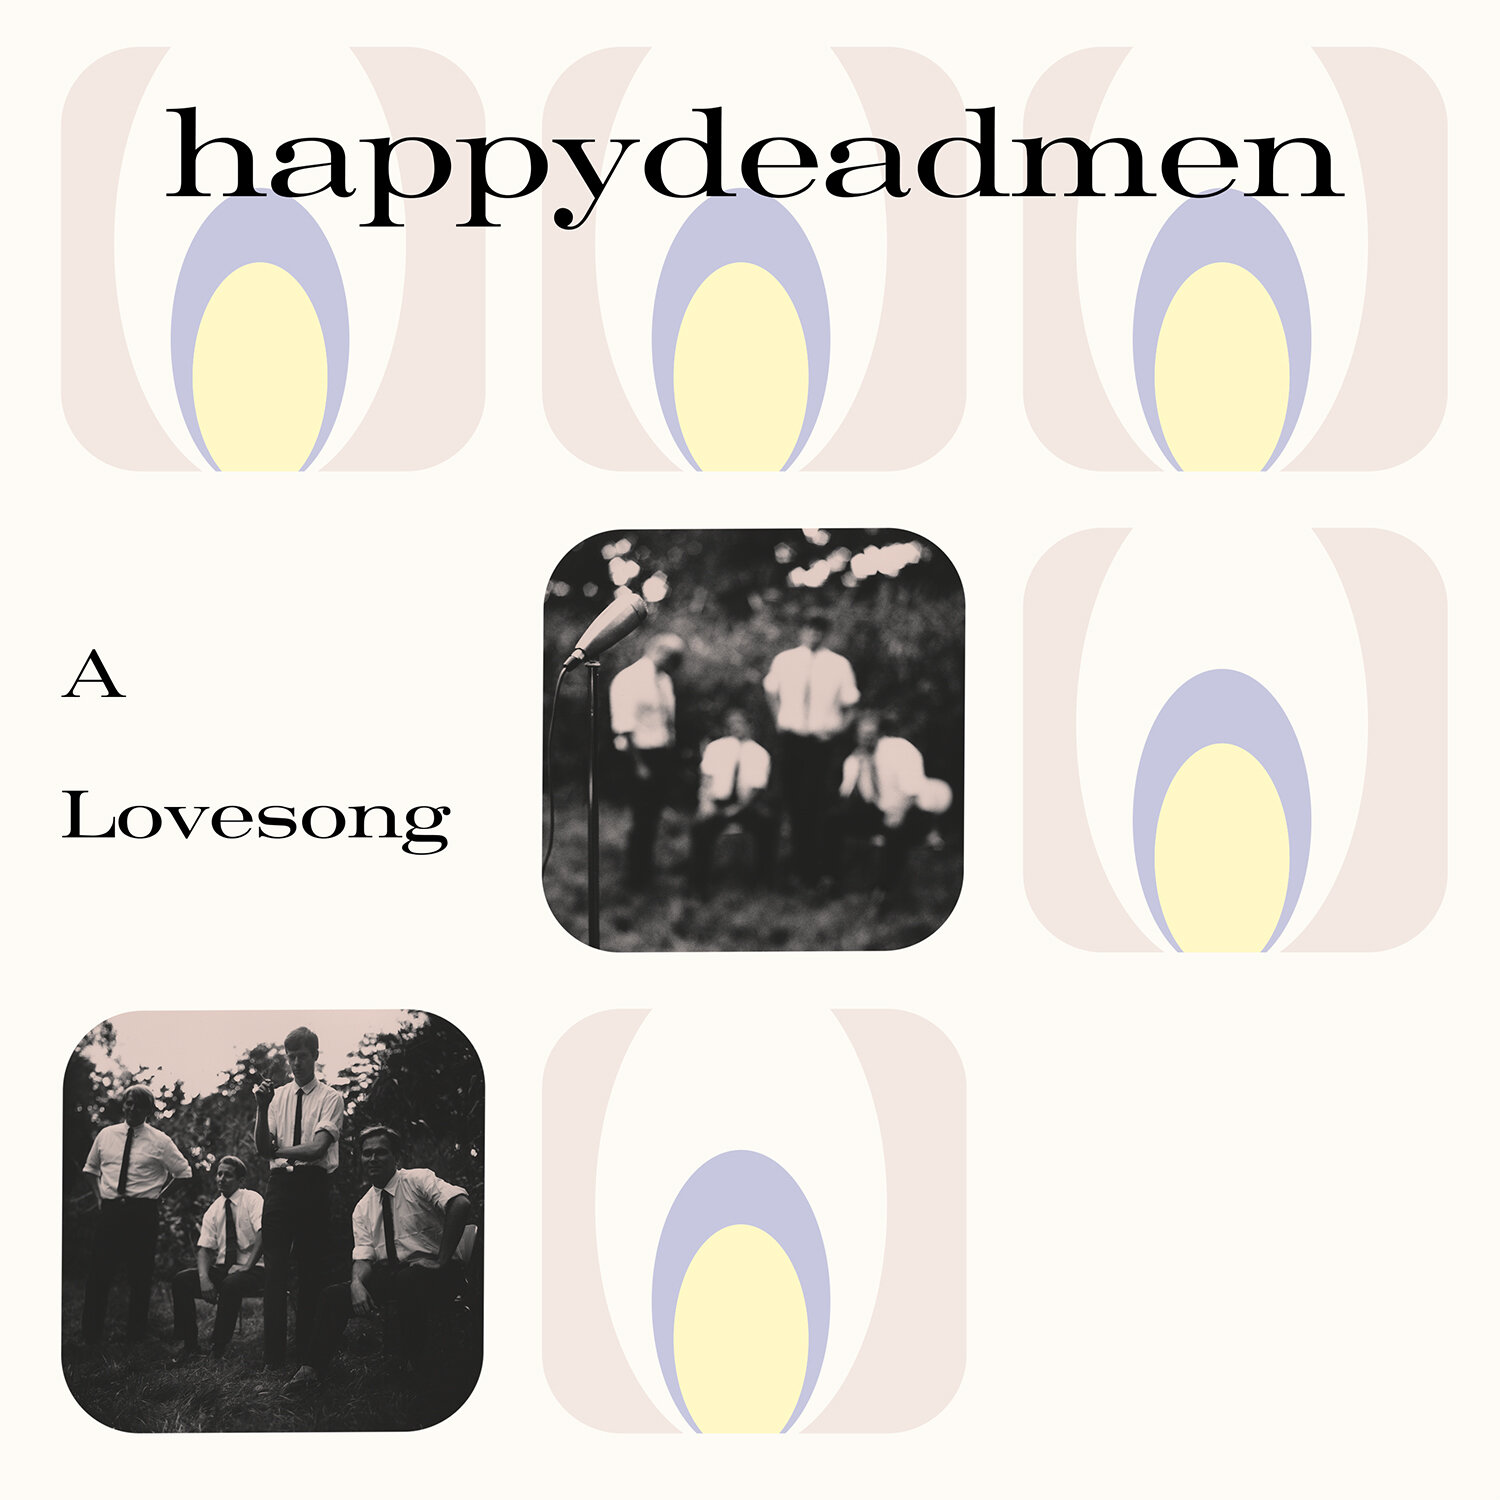 happydeadmen